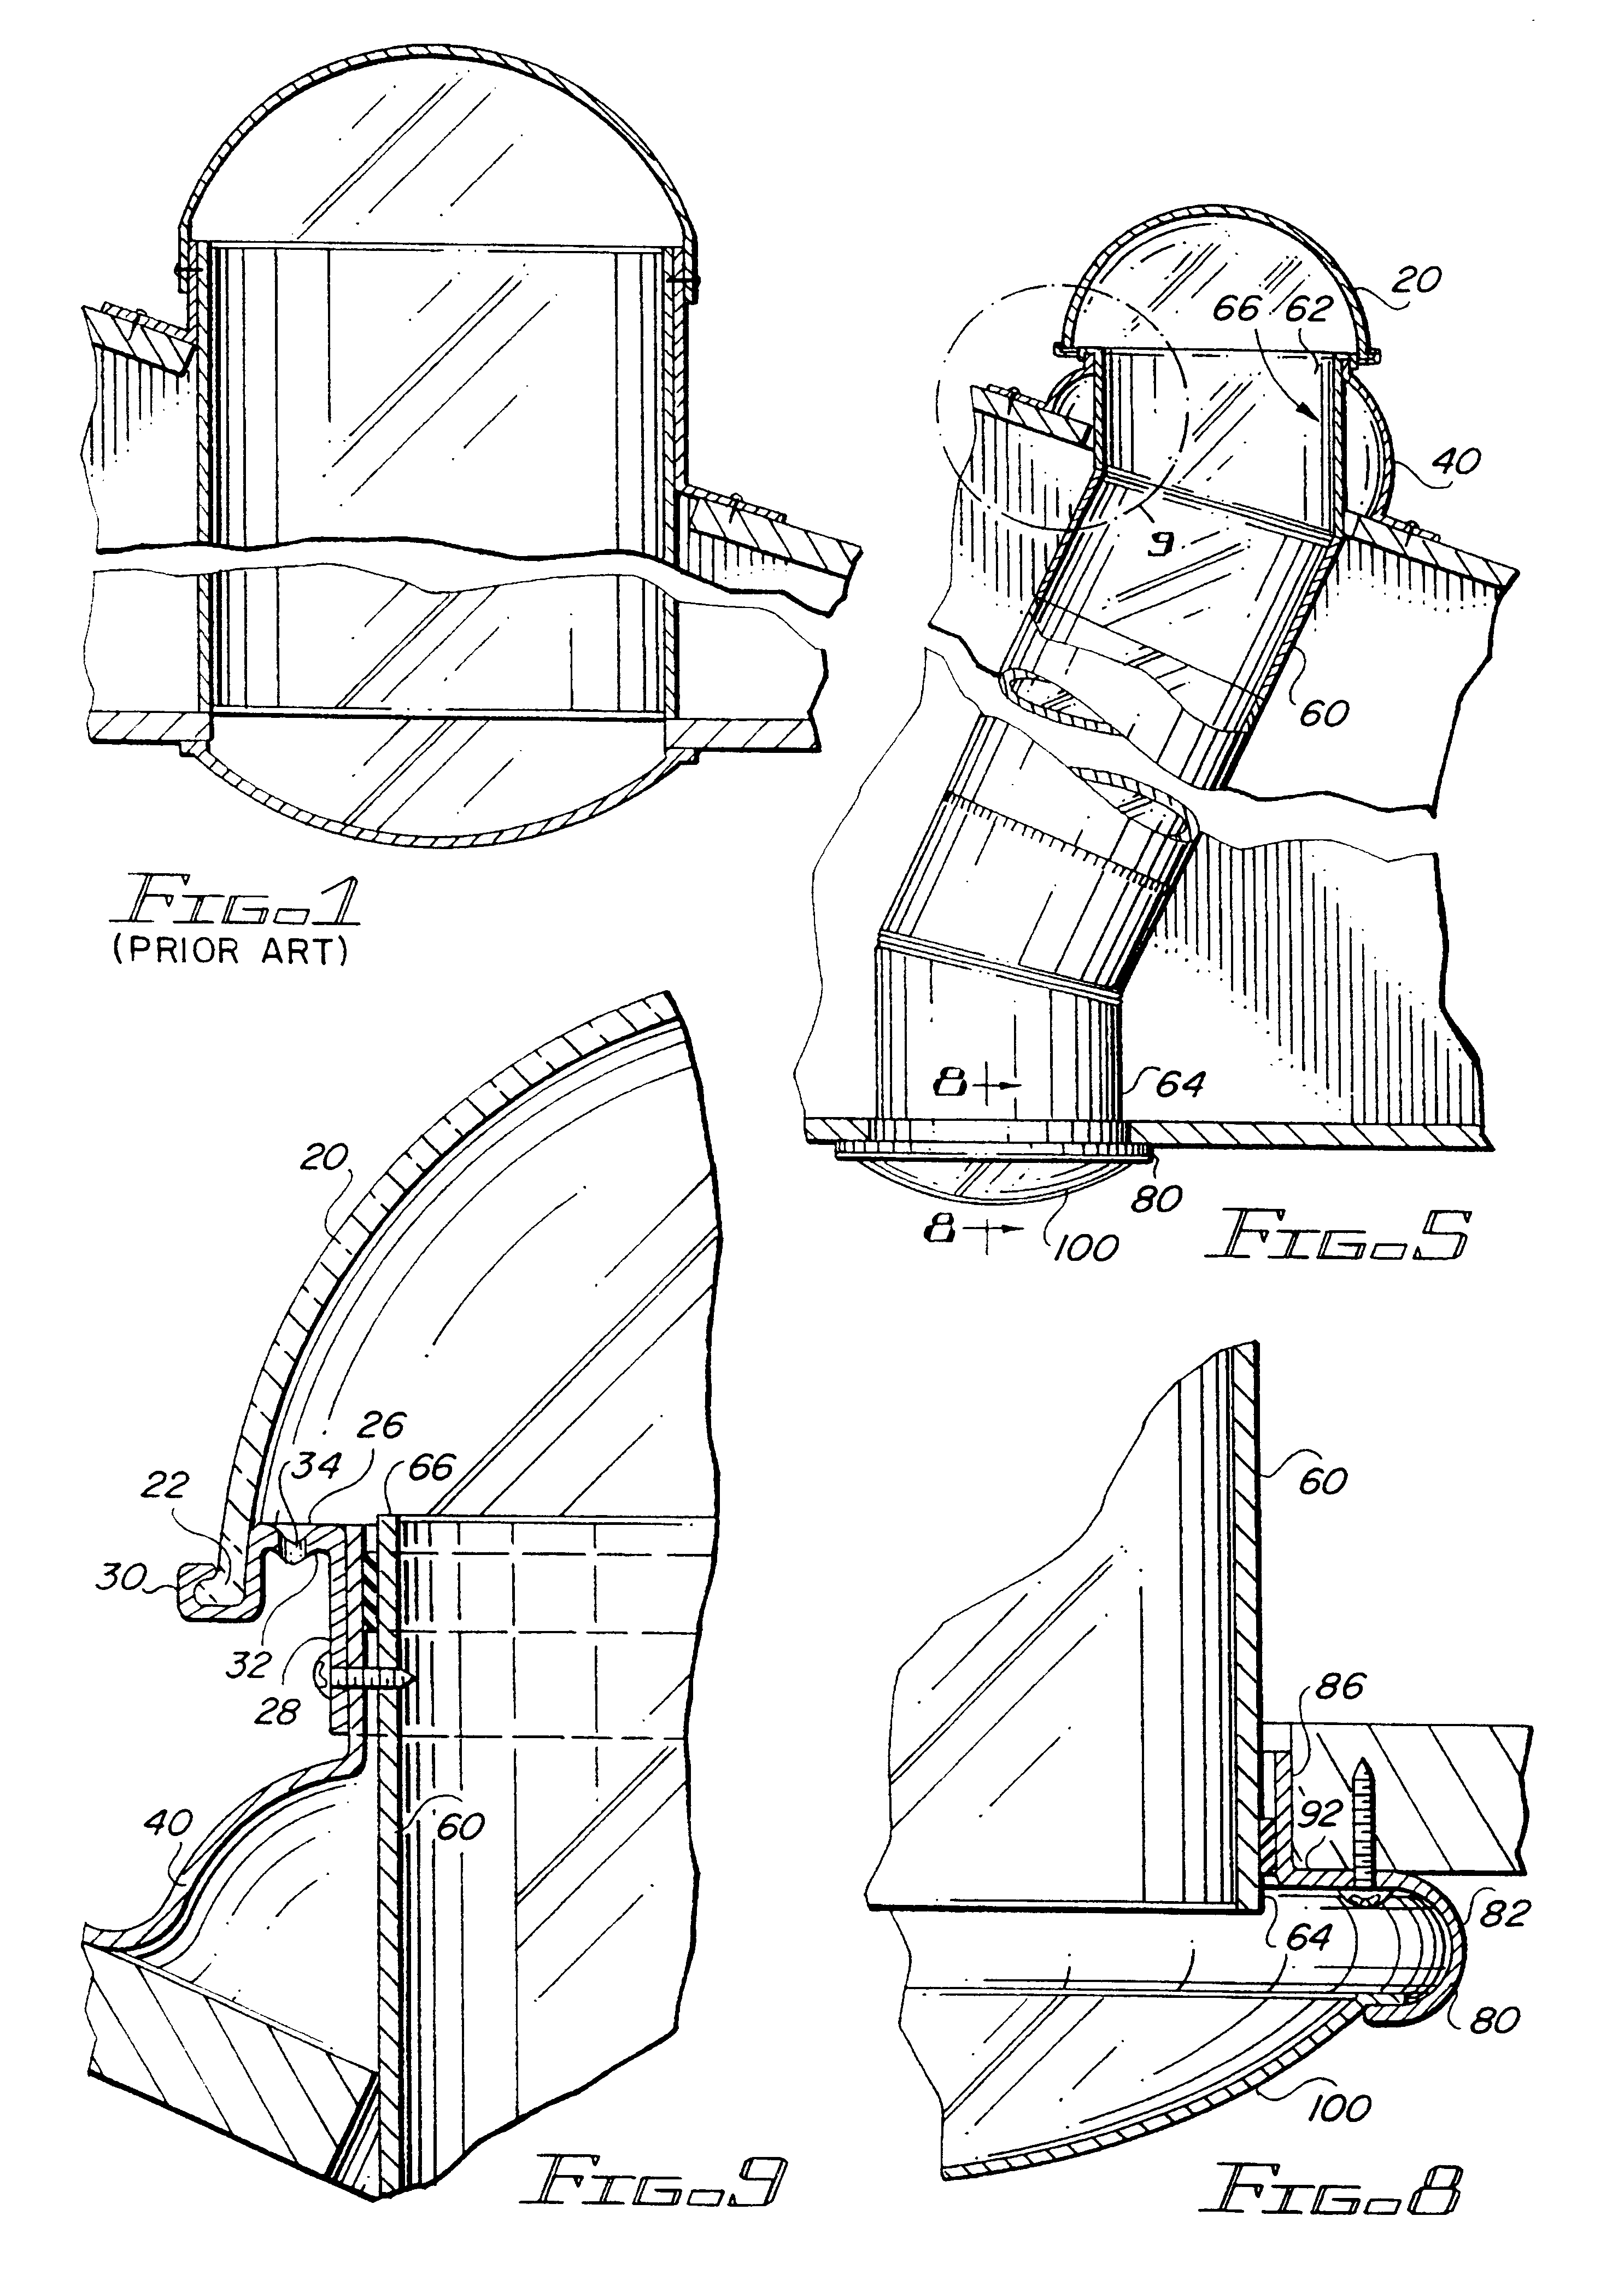 Method and apparatus for a tubular skylight system